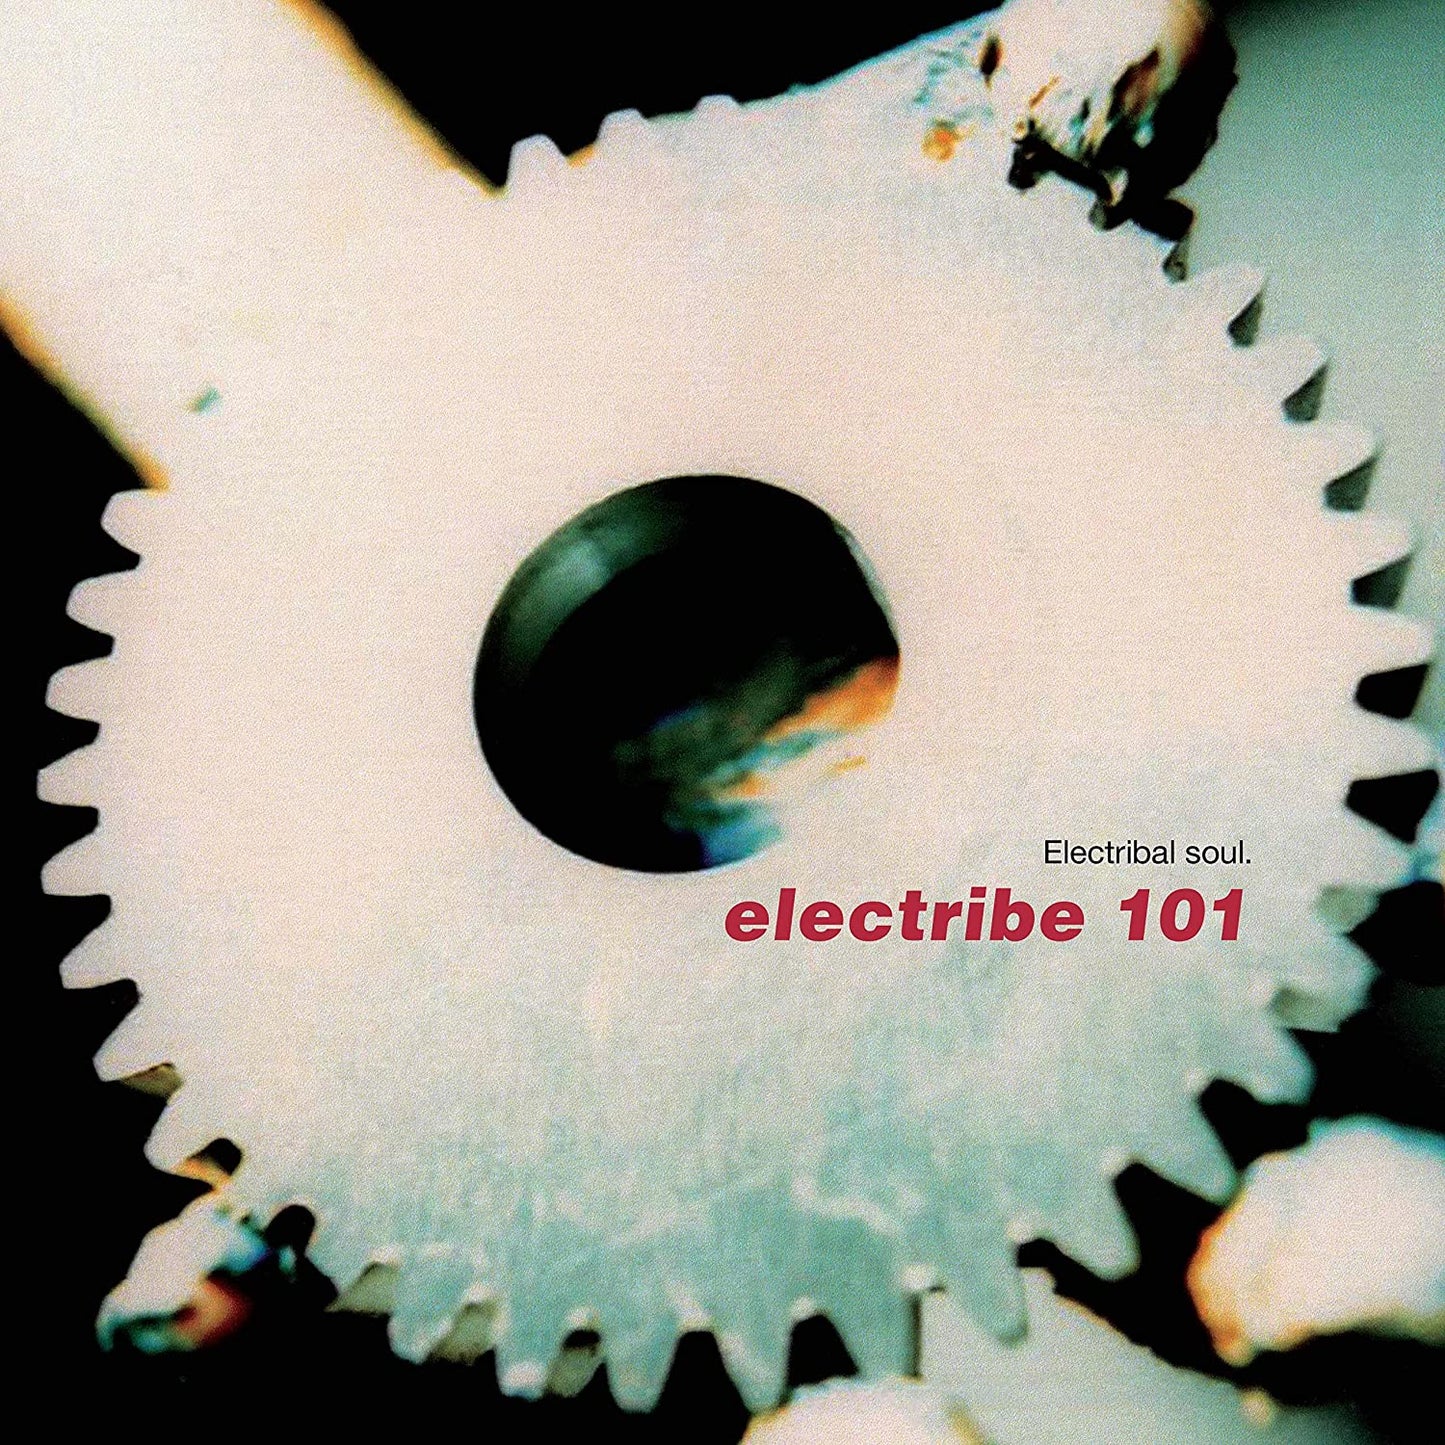 Electrical Soul - Electribe 101